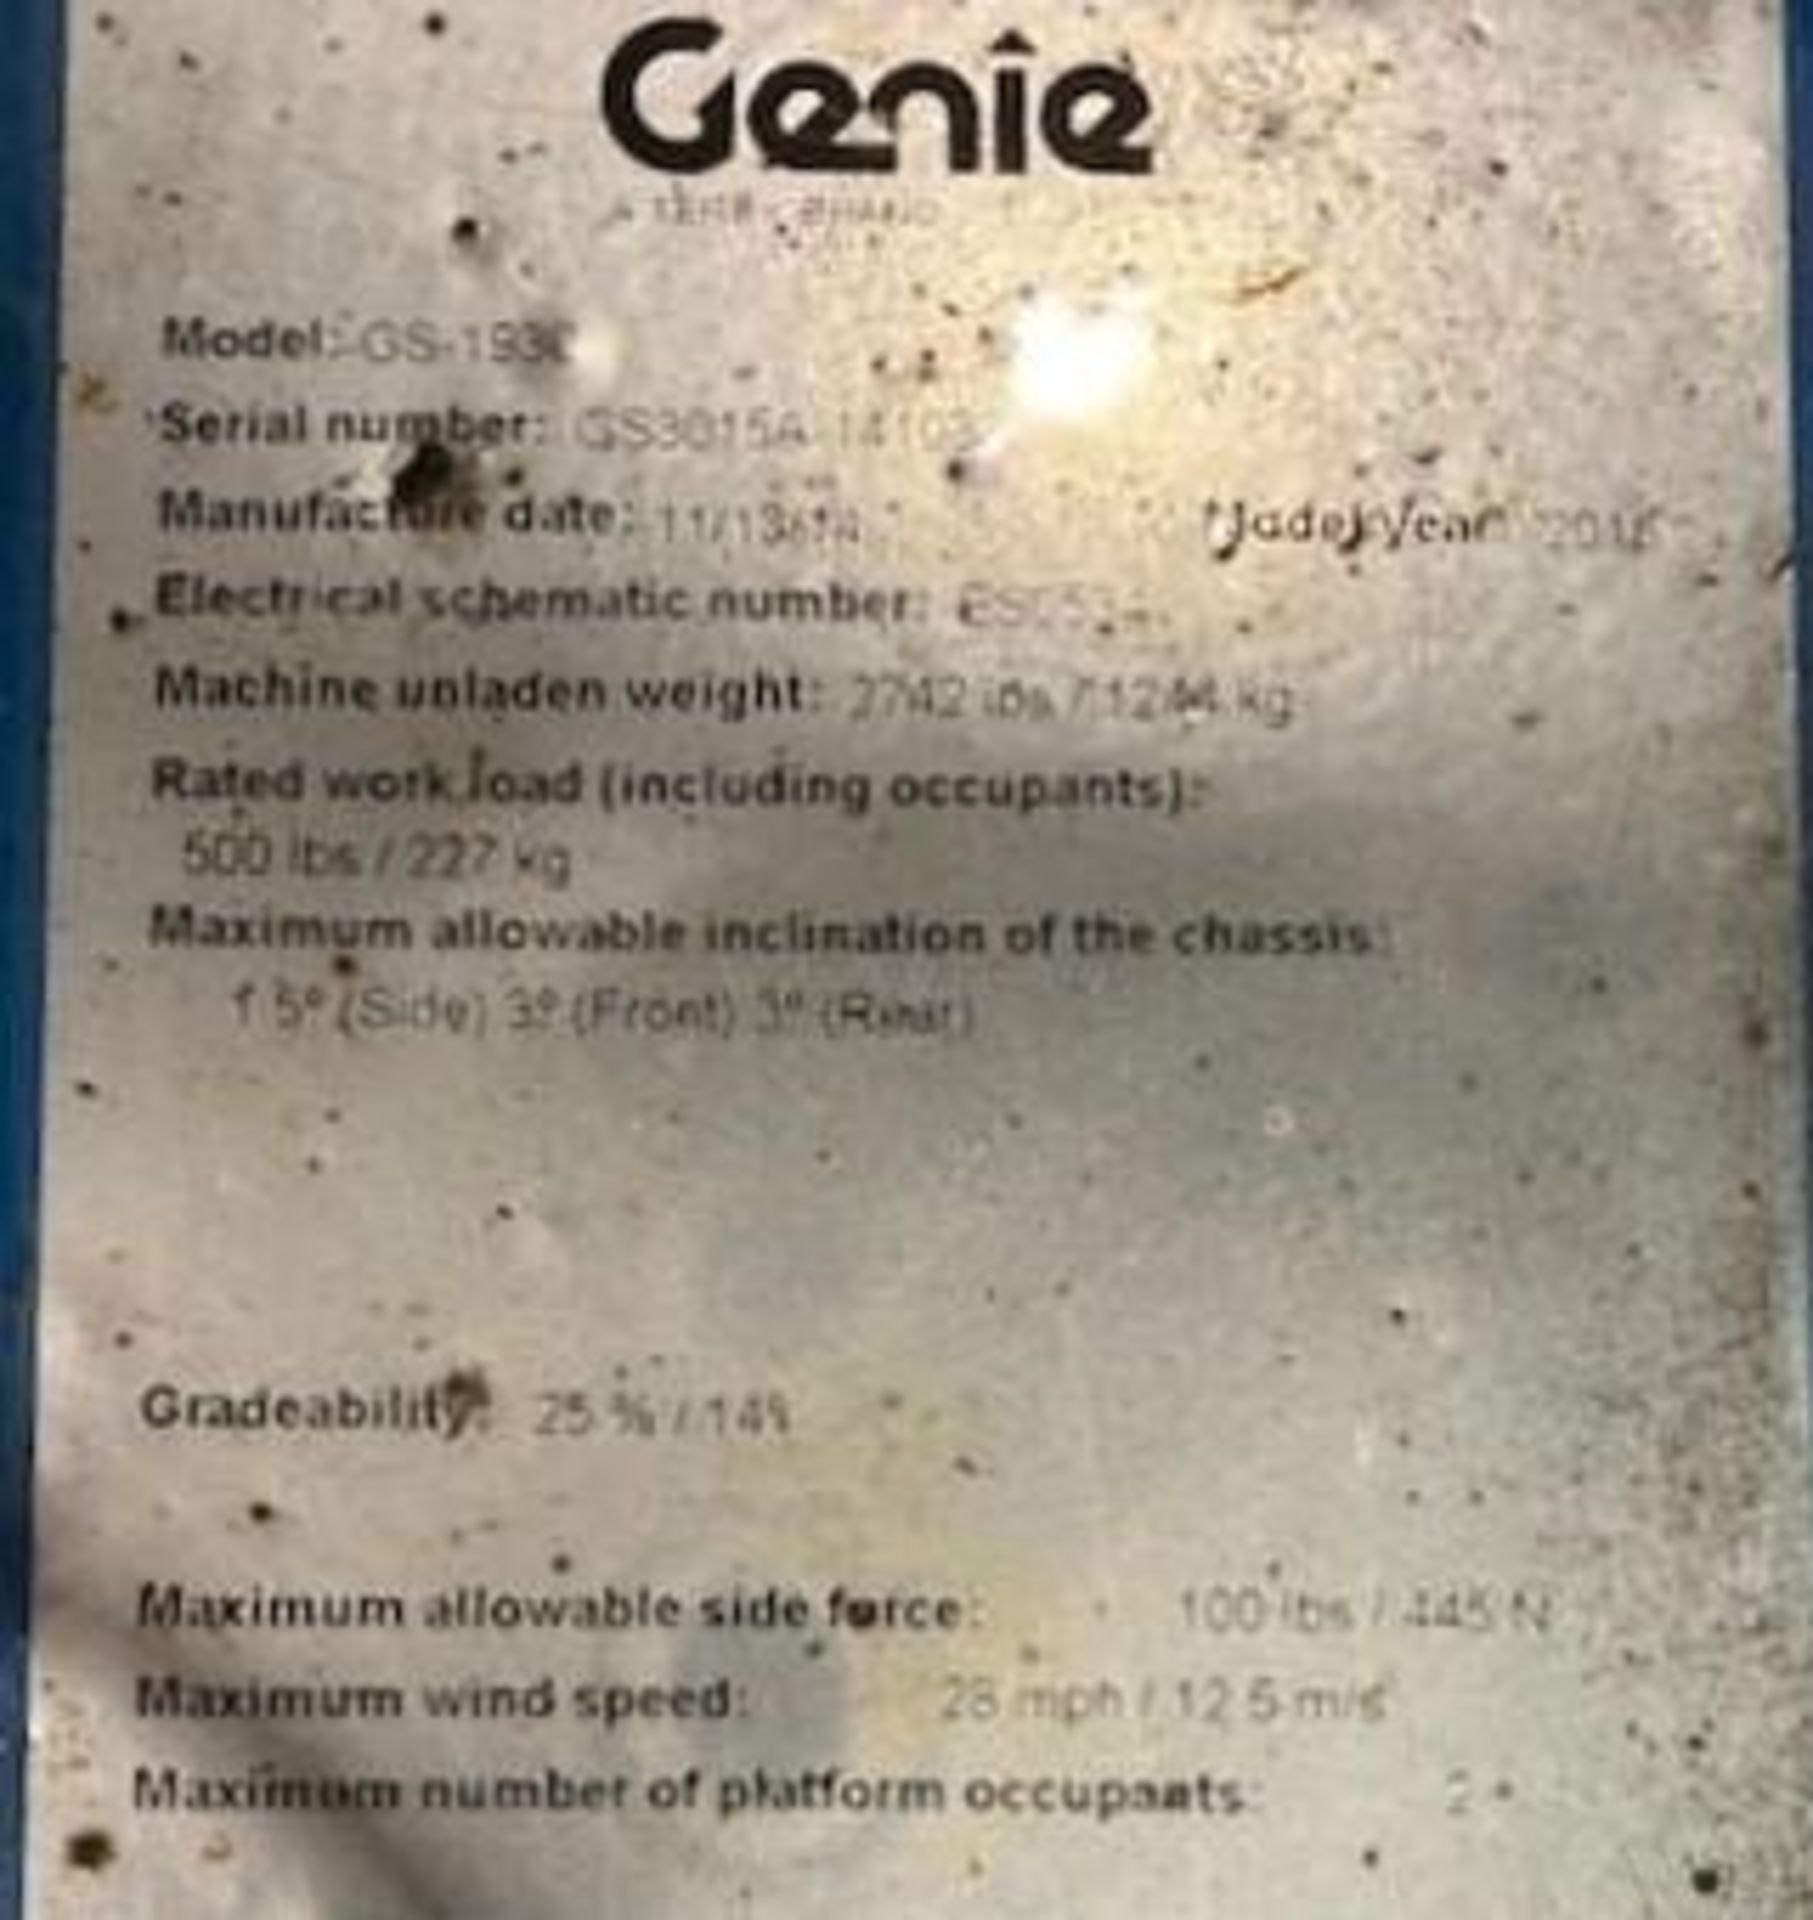 2014 Genie #GS-1930 Scissor Lift - Image 5 of 6